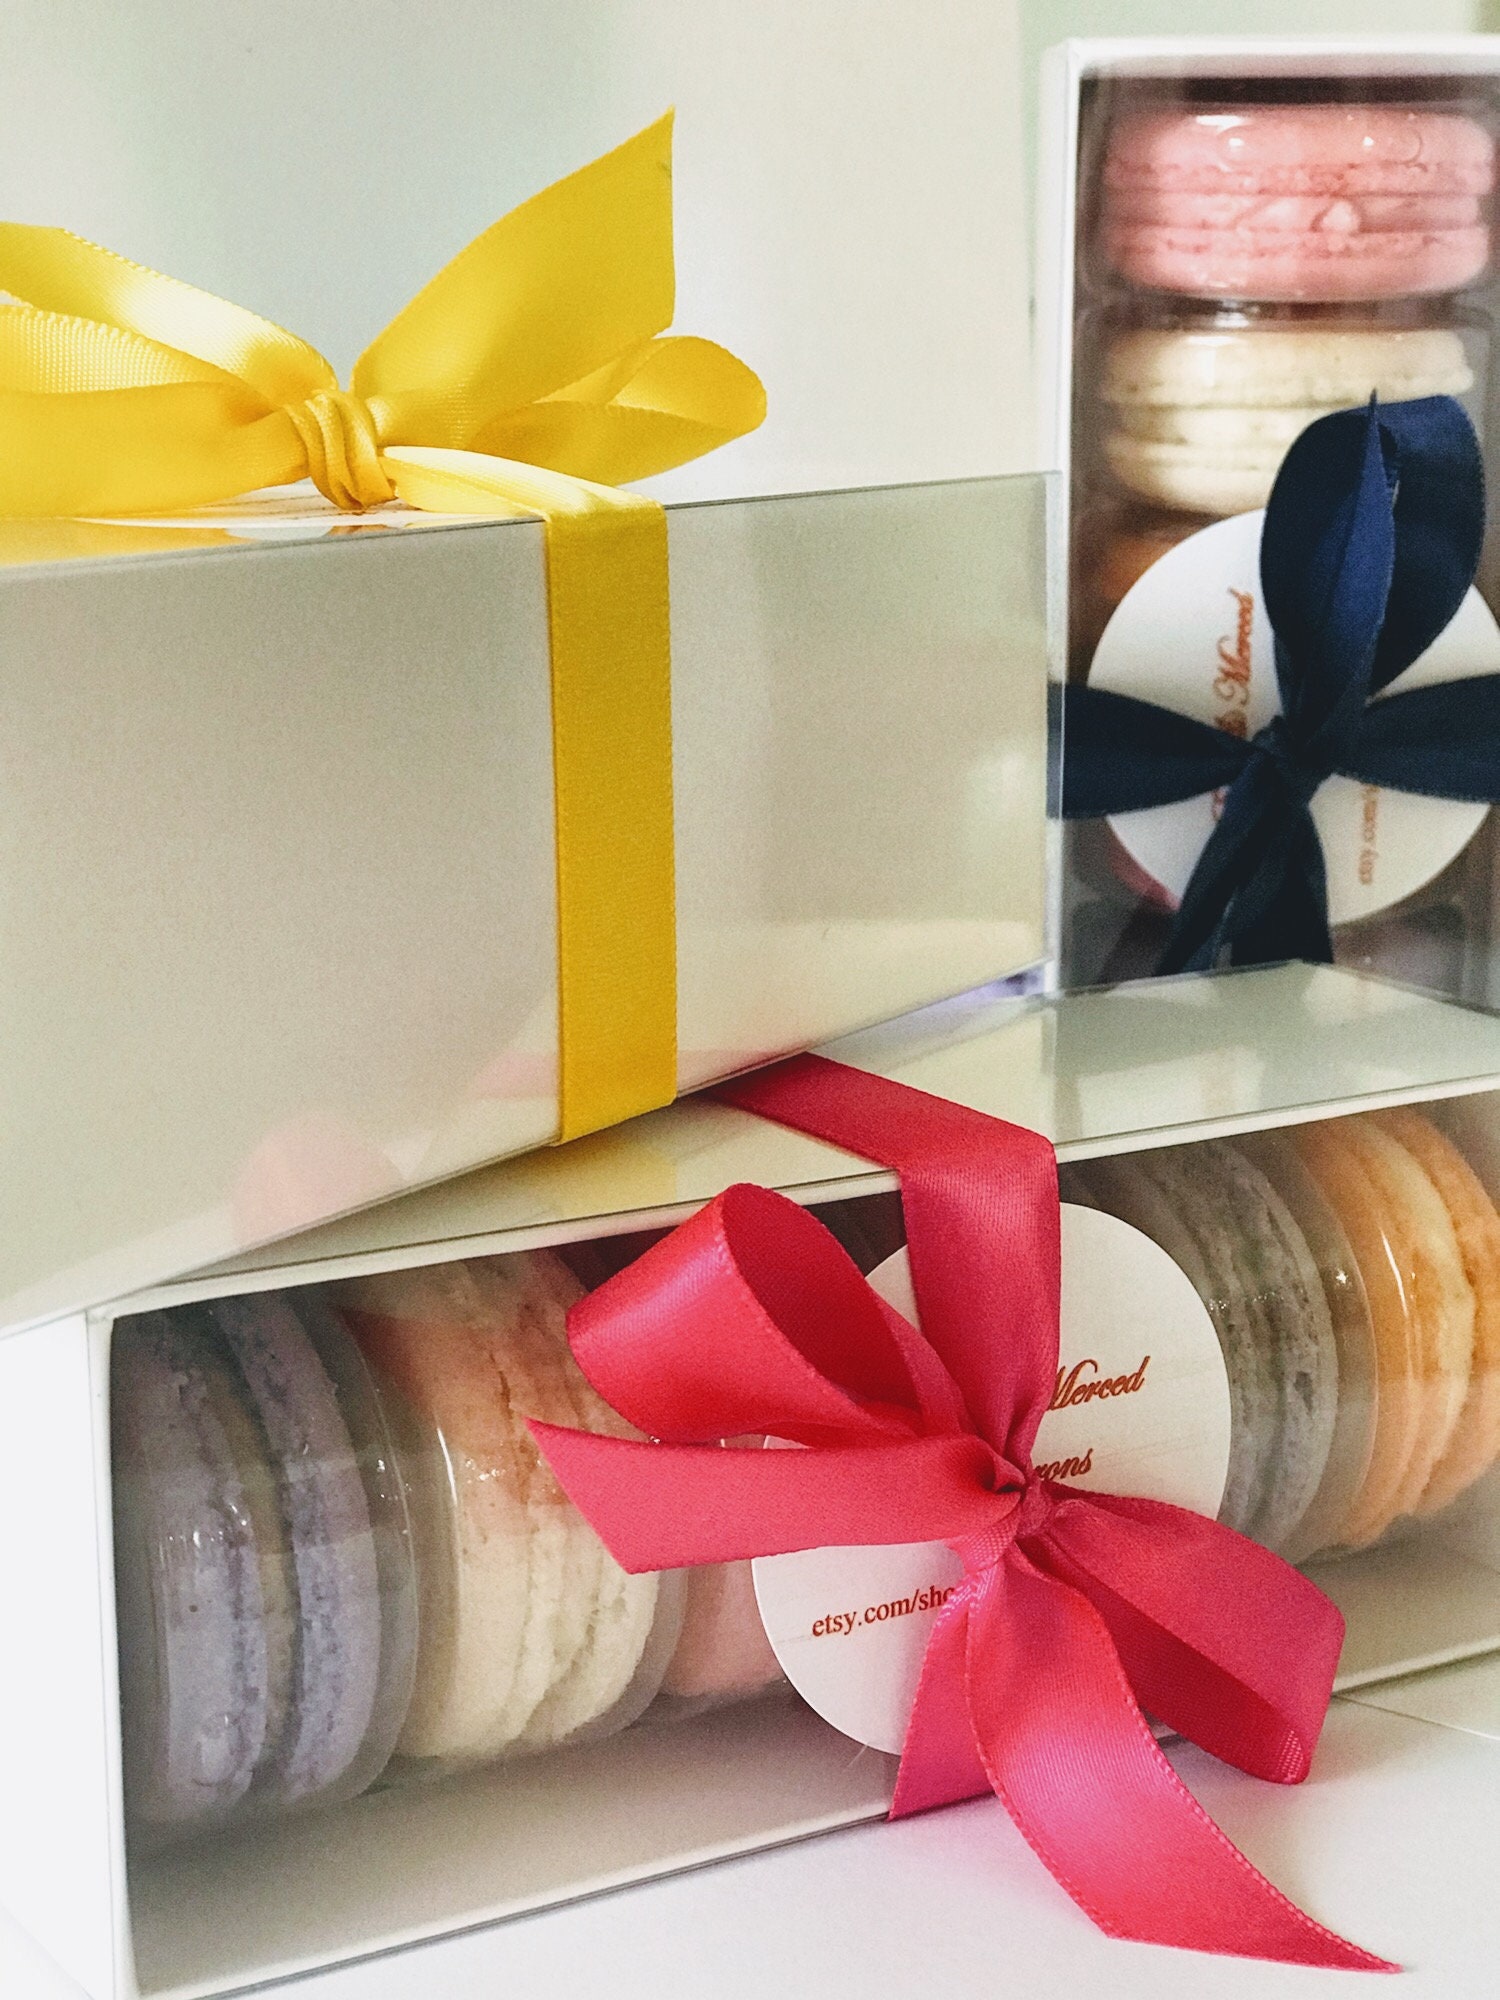 12 Chocolates and Macarons Wood Gift Box